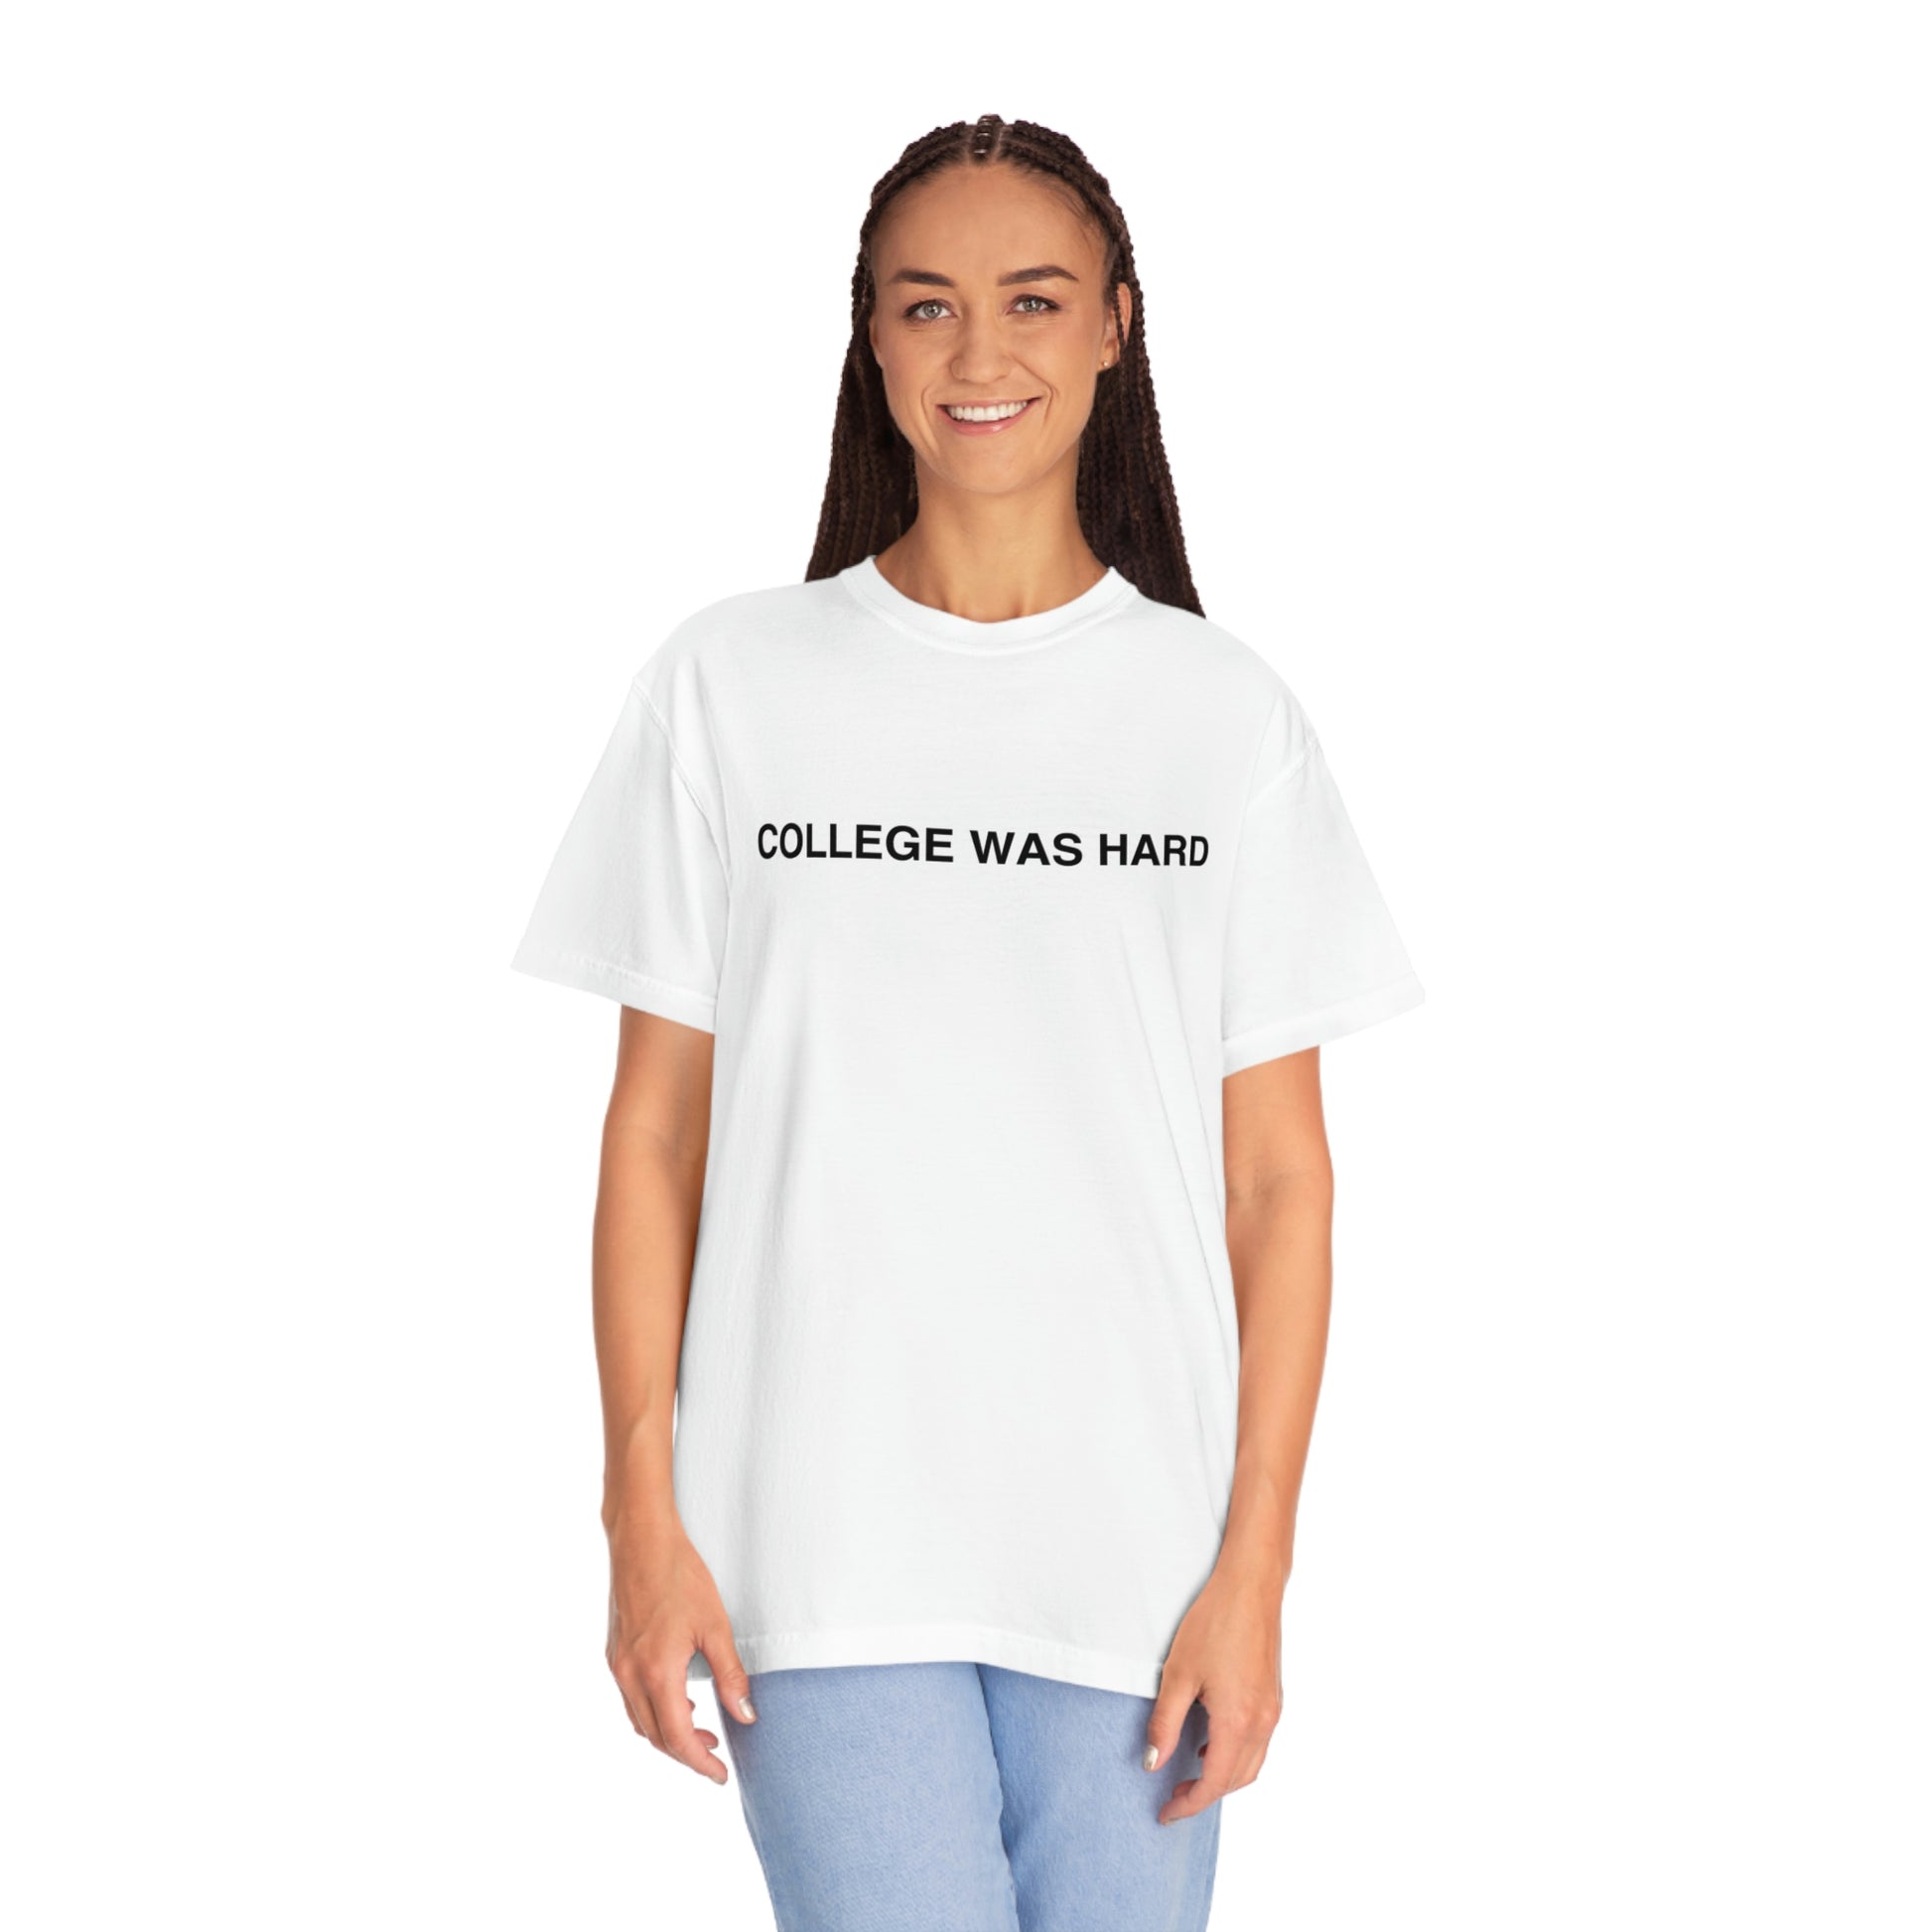 COLLEGE WAS HARD White t-shirt